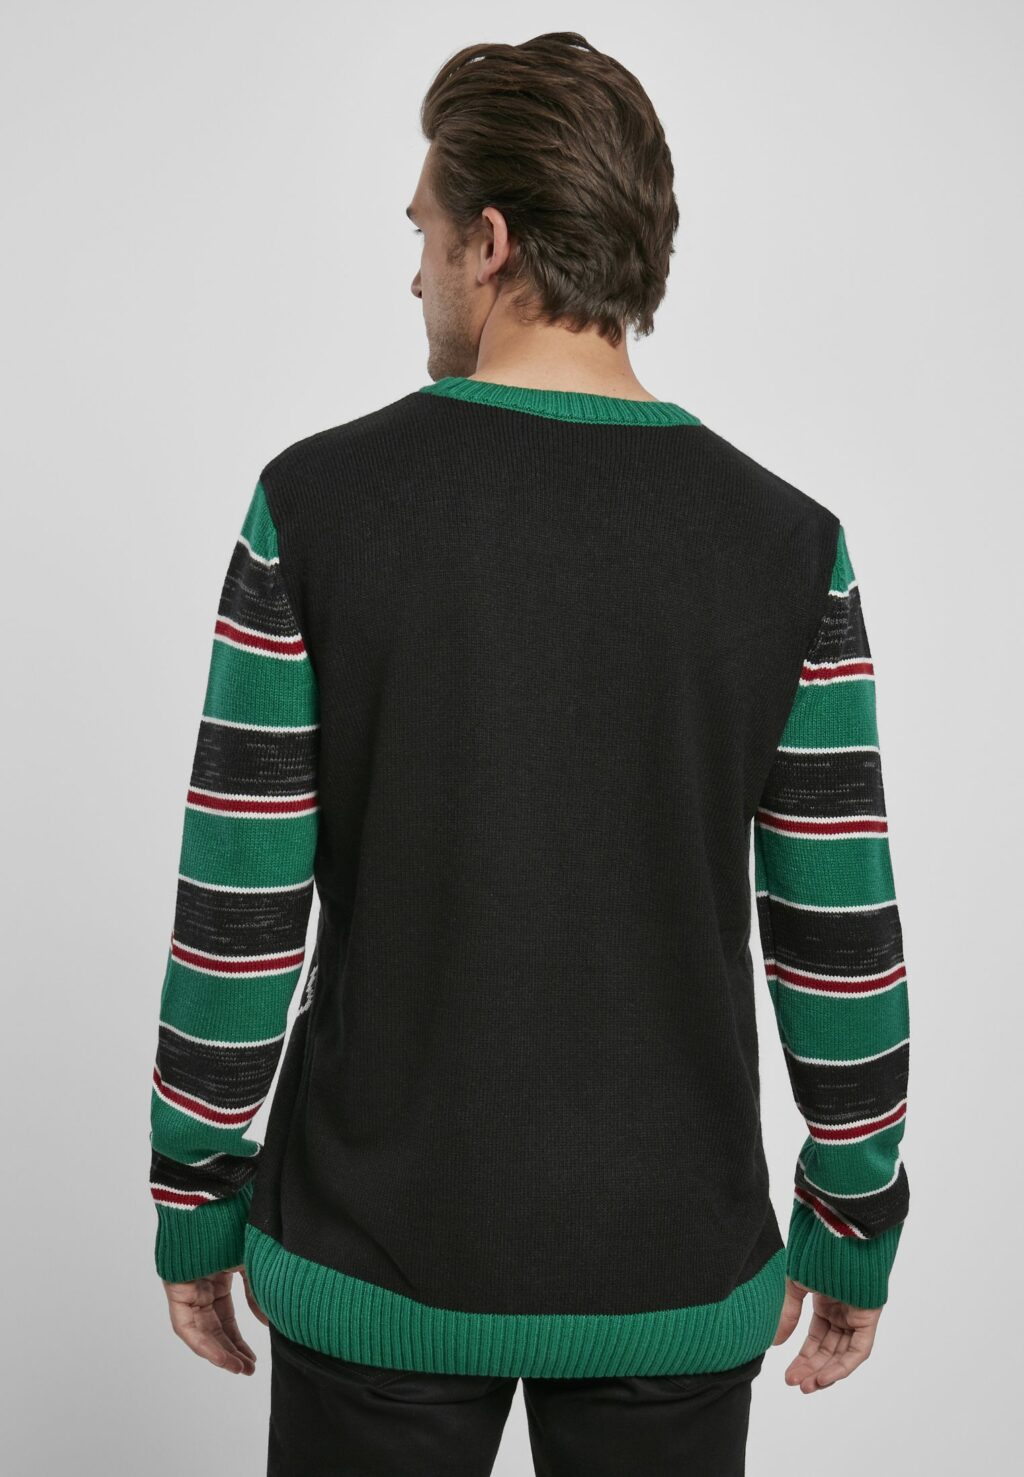 Urban Classics Savior Christmas Sweater black/x-masgreen TB3837